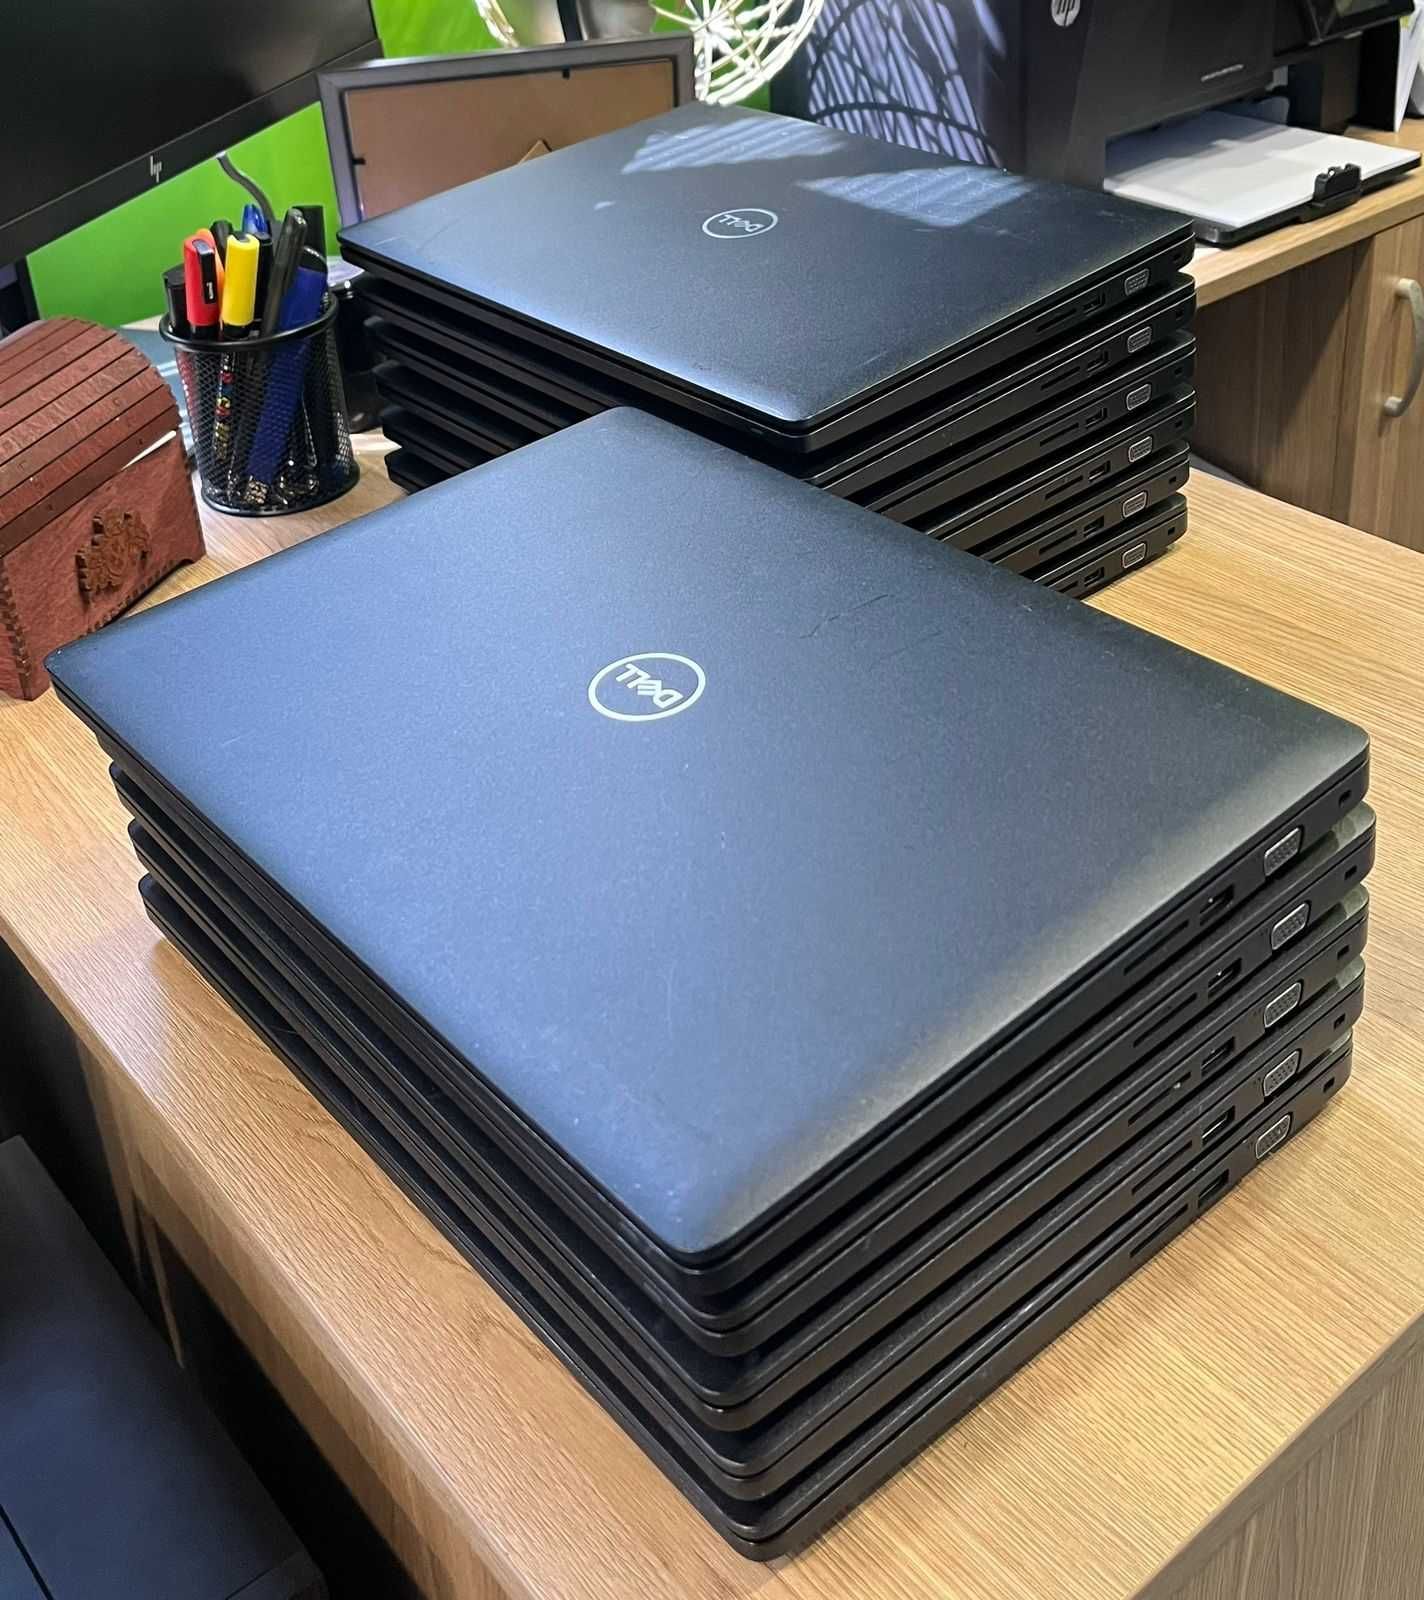 Ноутбук Dell Latitude 3480 (Core i3-7100U - 2.4GHz 2/4)